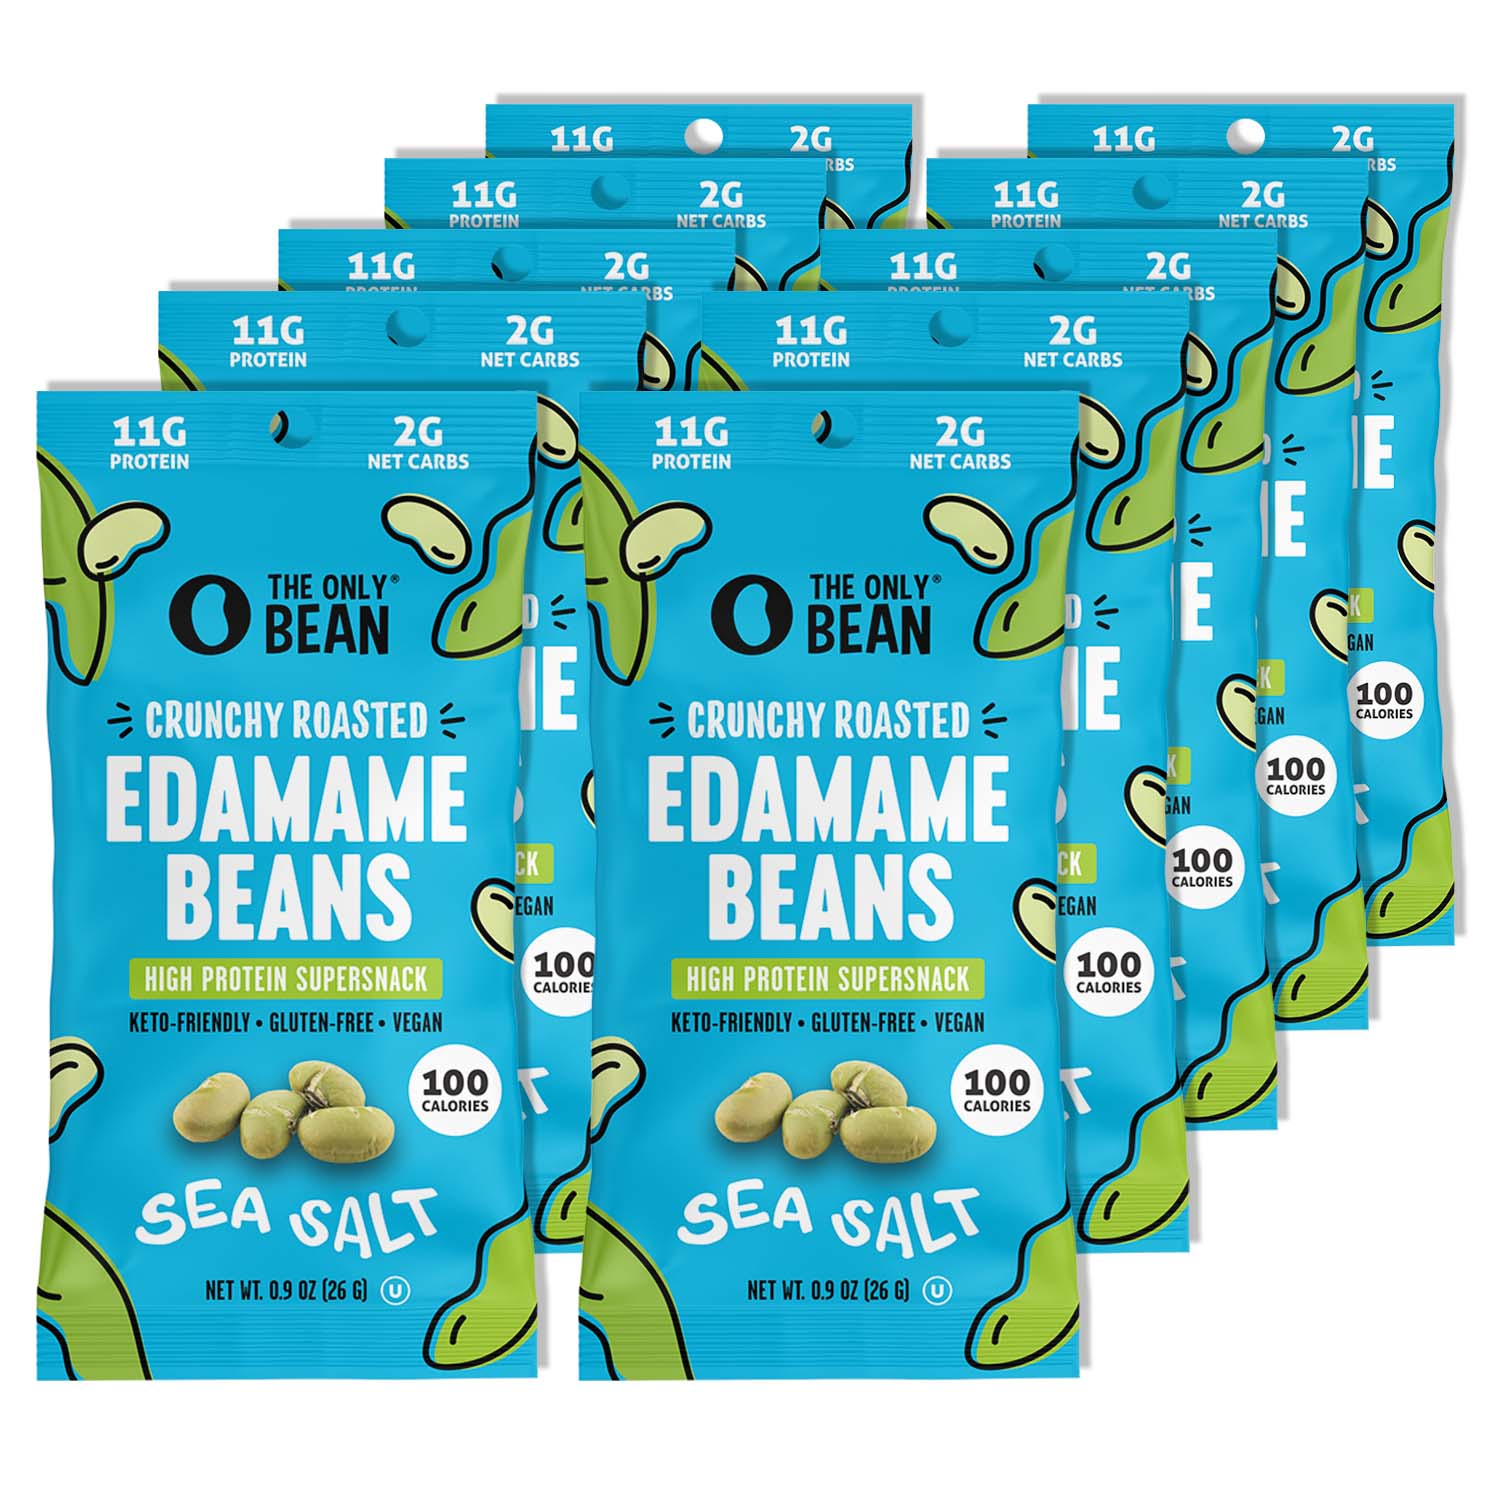 Crunchy Roasted Edamame Beans (Sea Salt) - 100 Calorie Packs, Keto Snacks (2g Net) - High Protein Healthy Snacks (11g Protein) - Low Carb & Calorie Gluten-Free Snack, Vegan Keto Food -  (10 Pack)